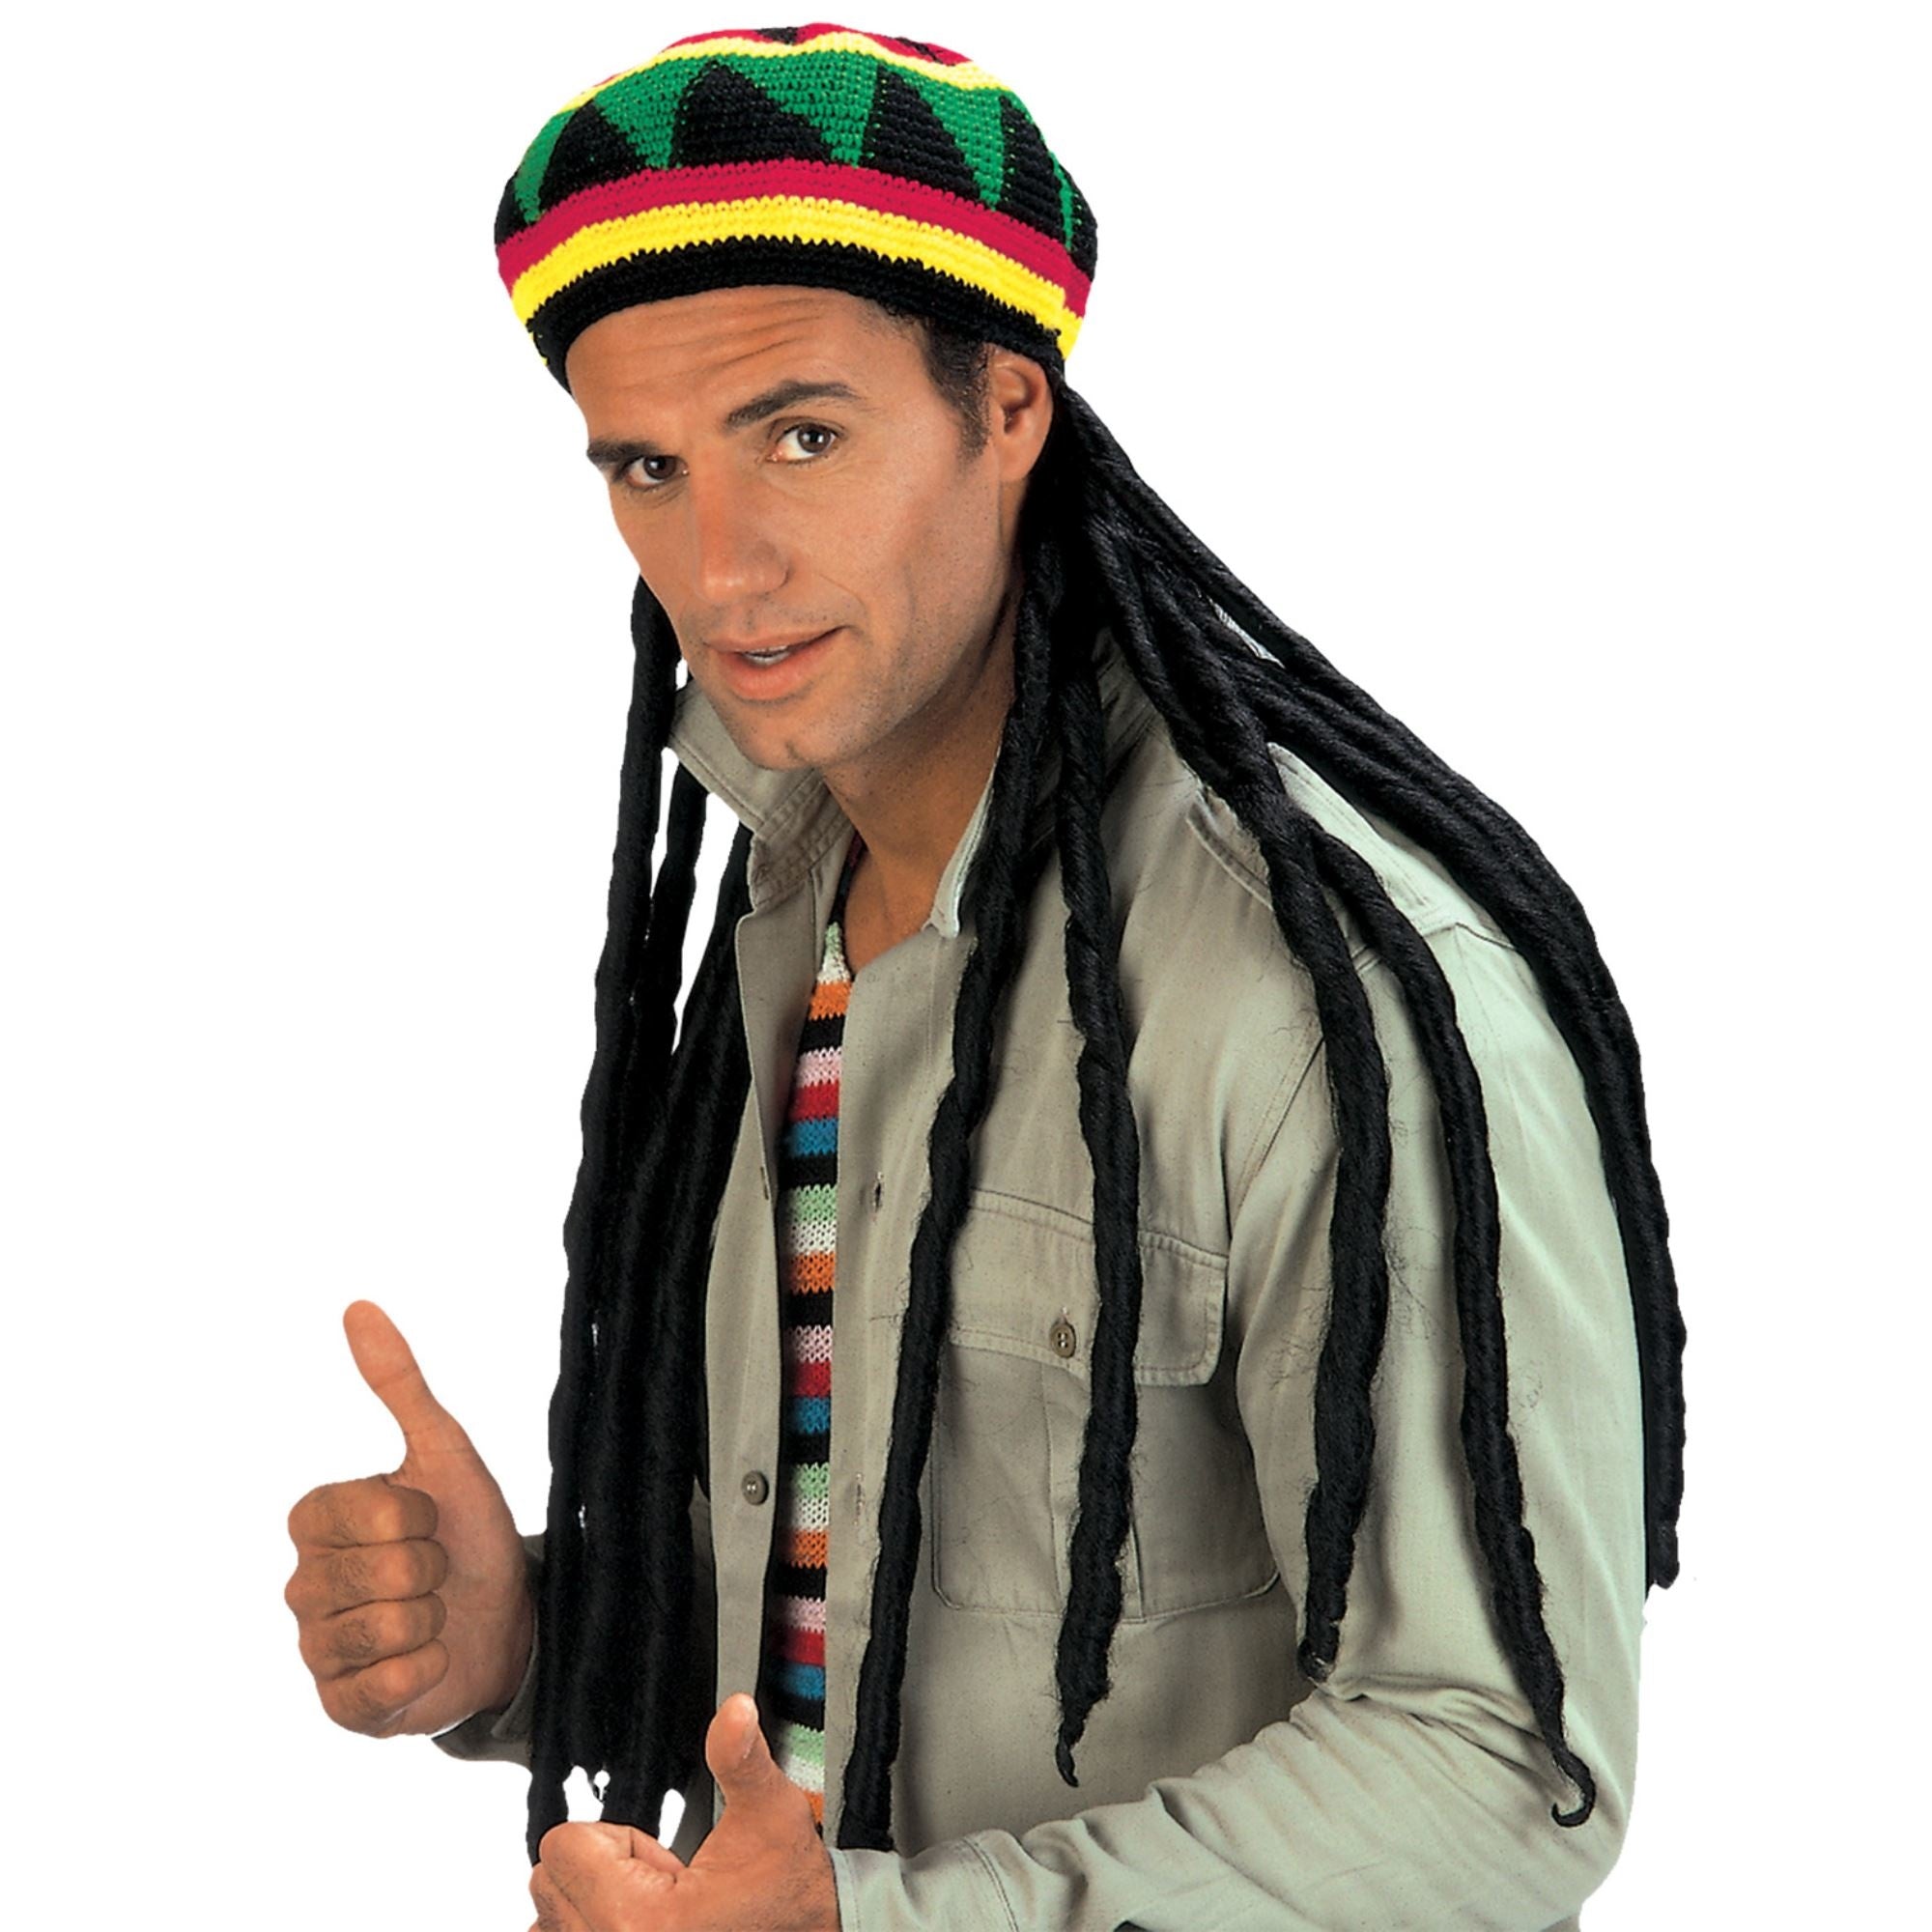 Widmann - Bob Marley & Reggae & Rasta Kostuum - Rastamuts Met Extra Lange Dread-Locks - zwart - Carnavalskleding - Verkleedkleding